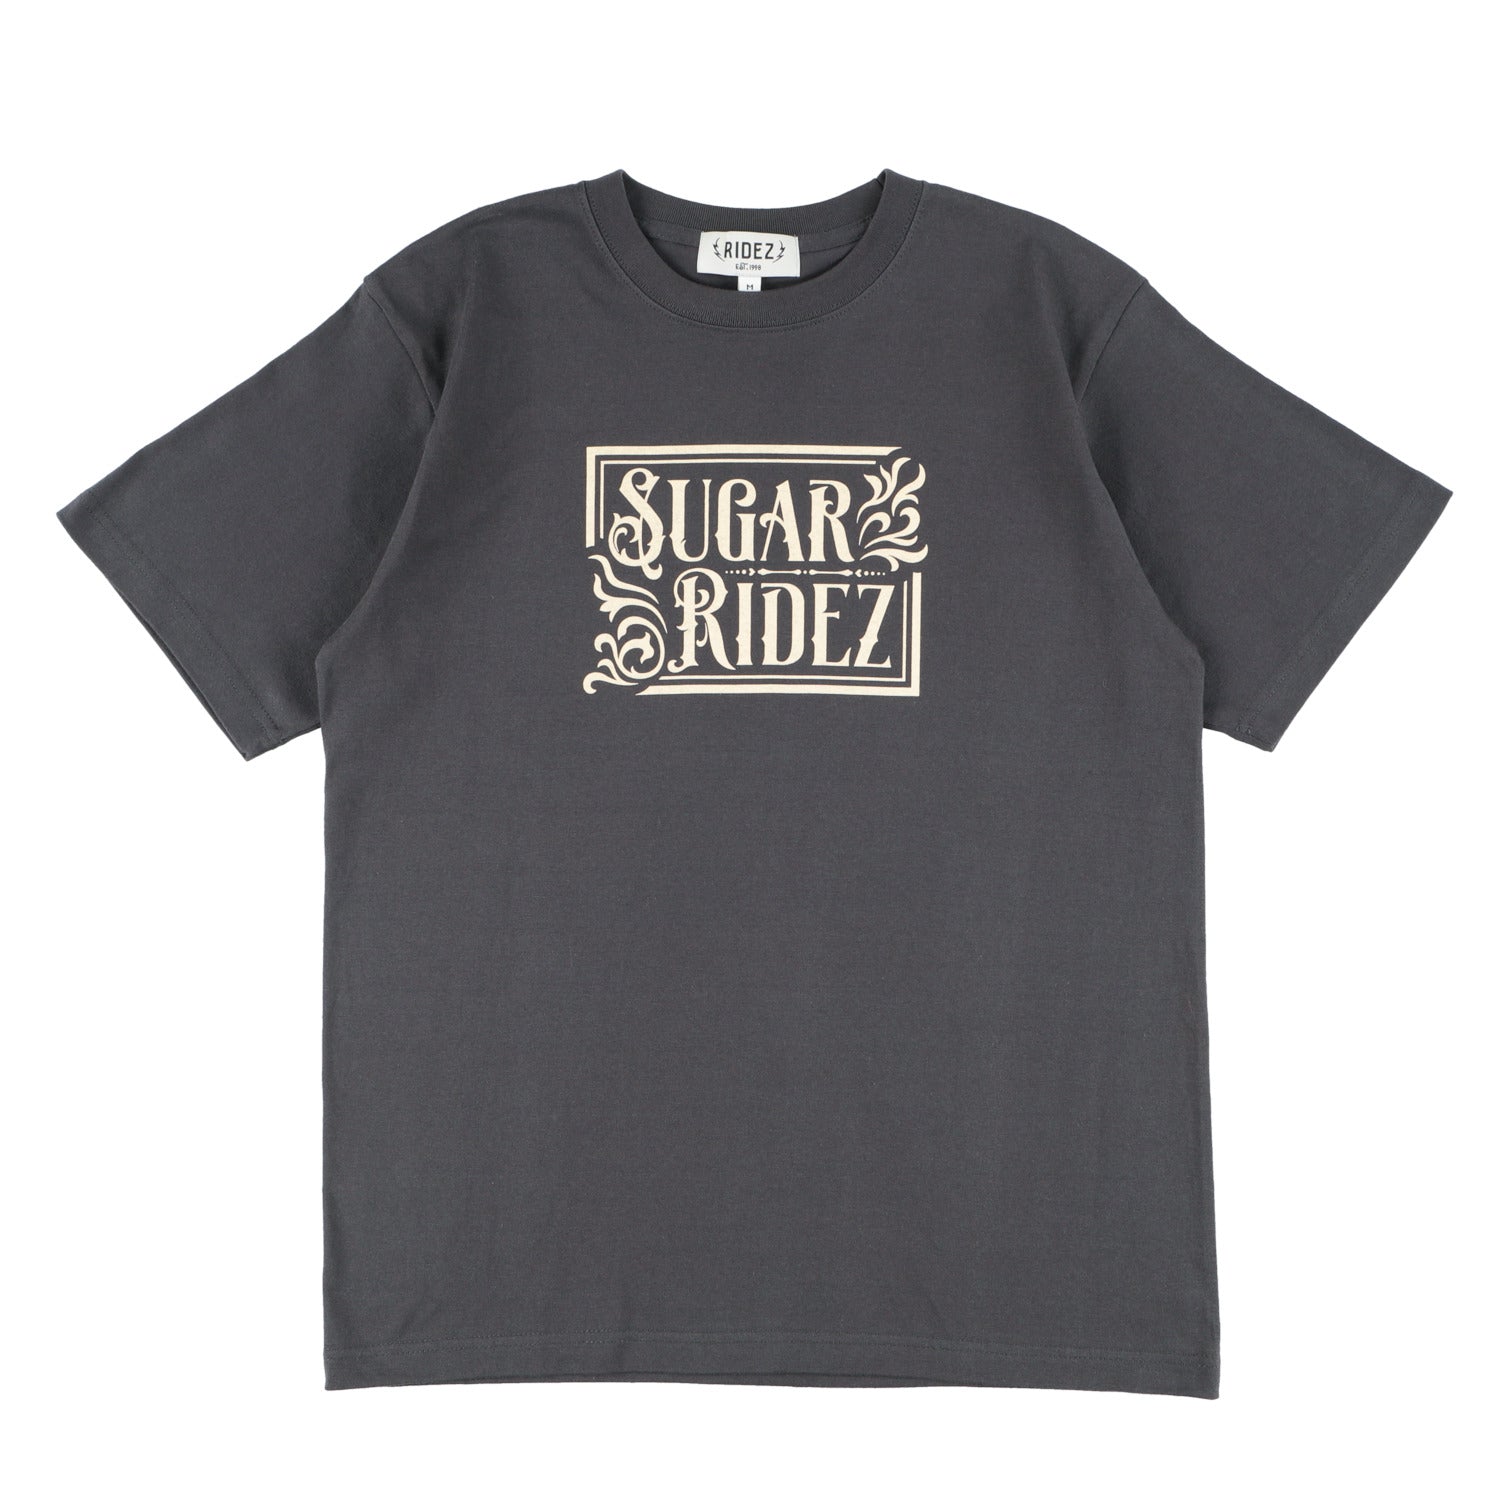 SUGAR RIDEZ 6.2oz Women's T-shirt RD7014 